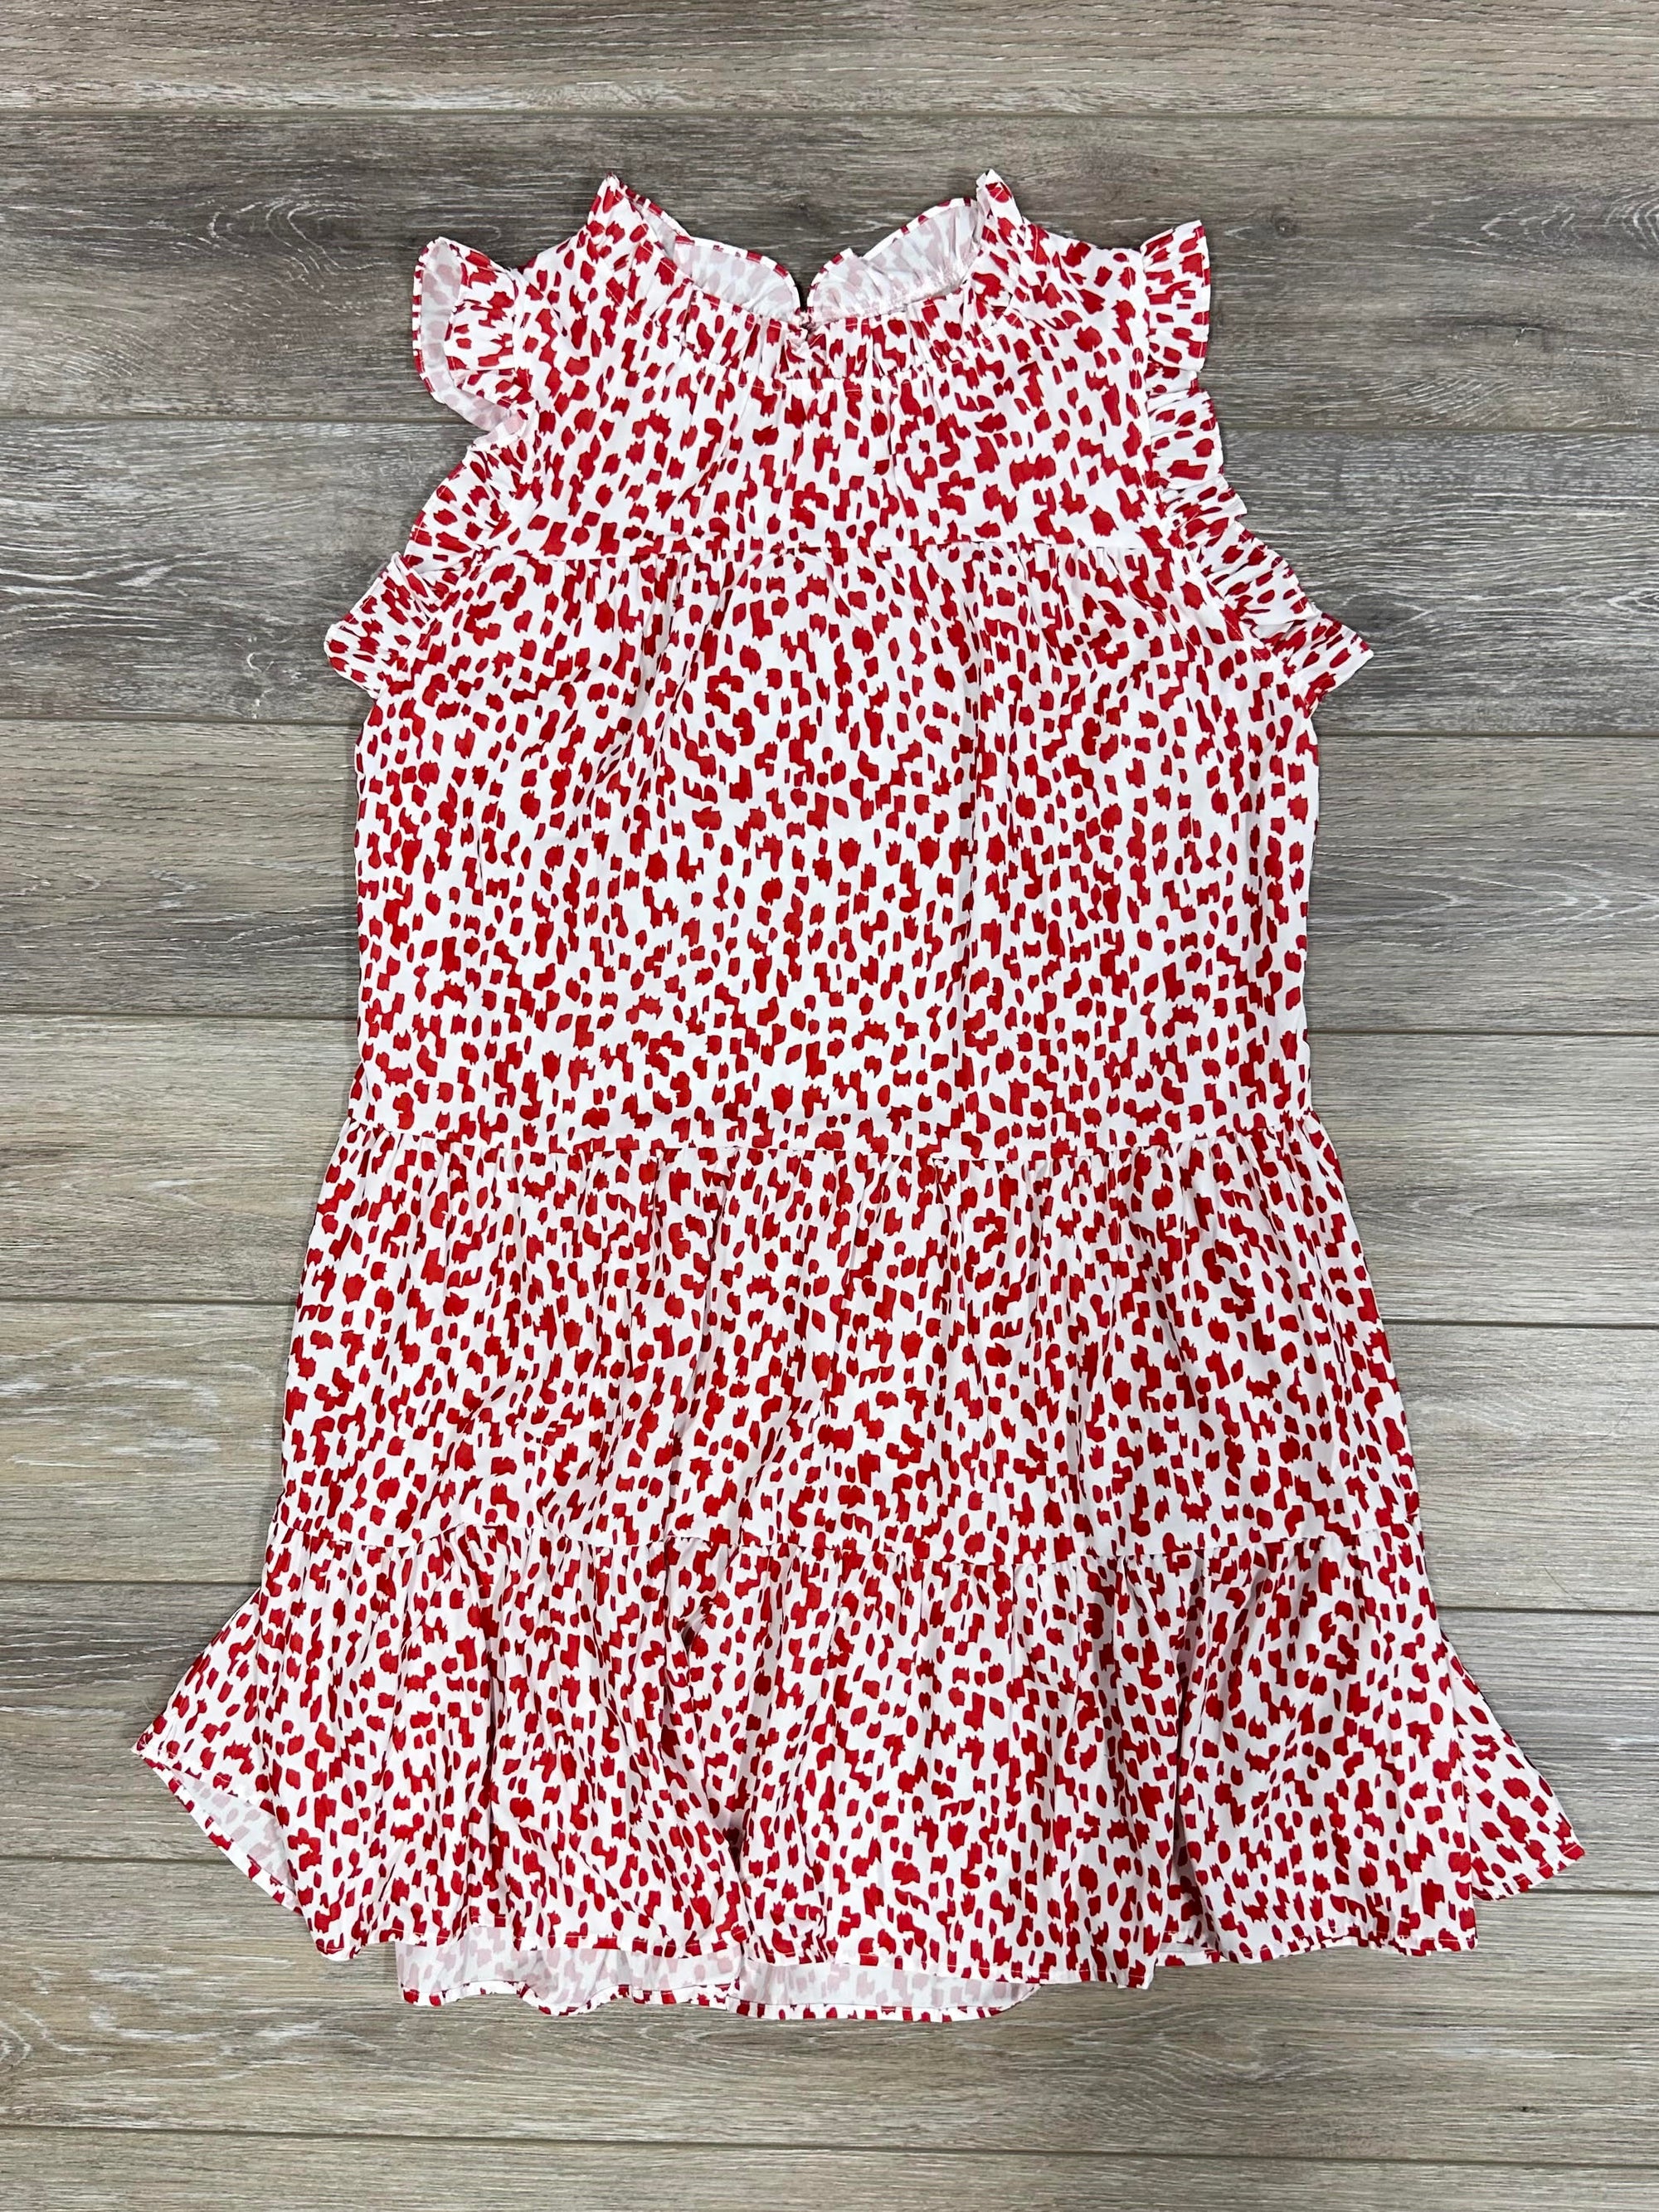 One of a Kind Item #122 - Women's Animal Print Dress Size L - Sydney So Sweet